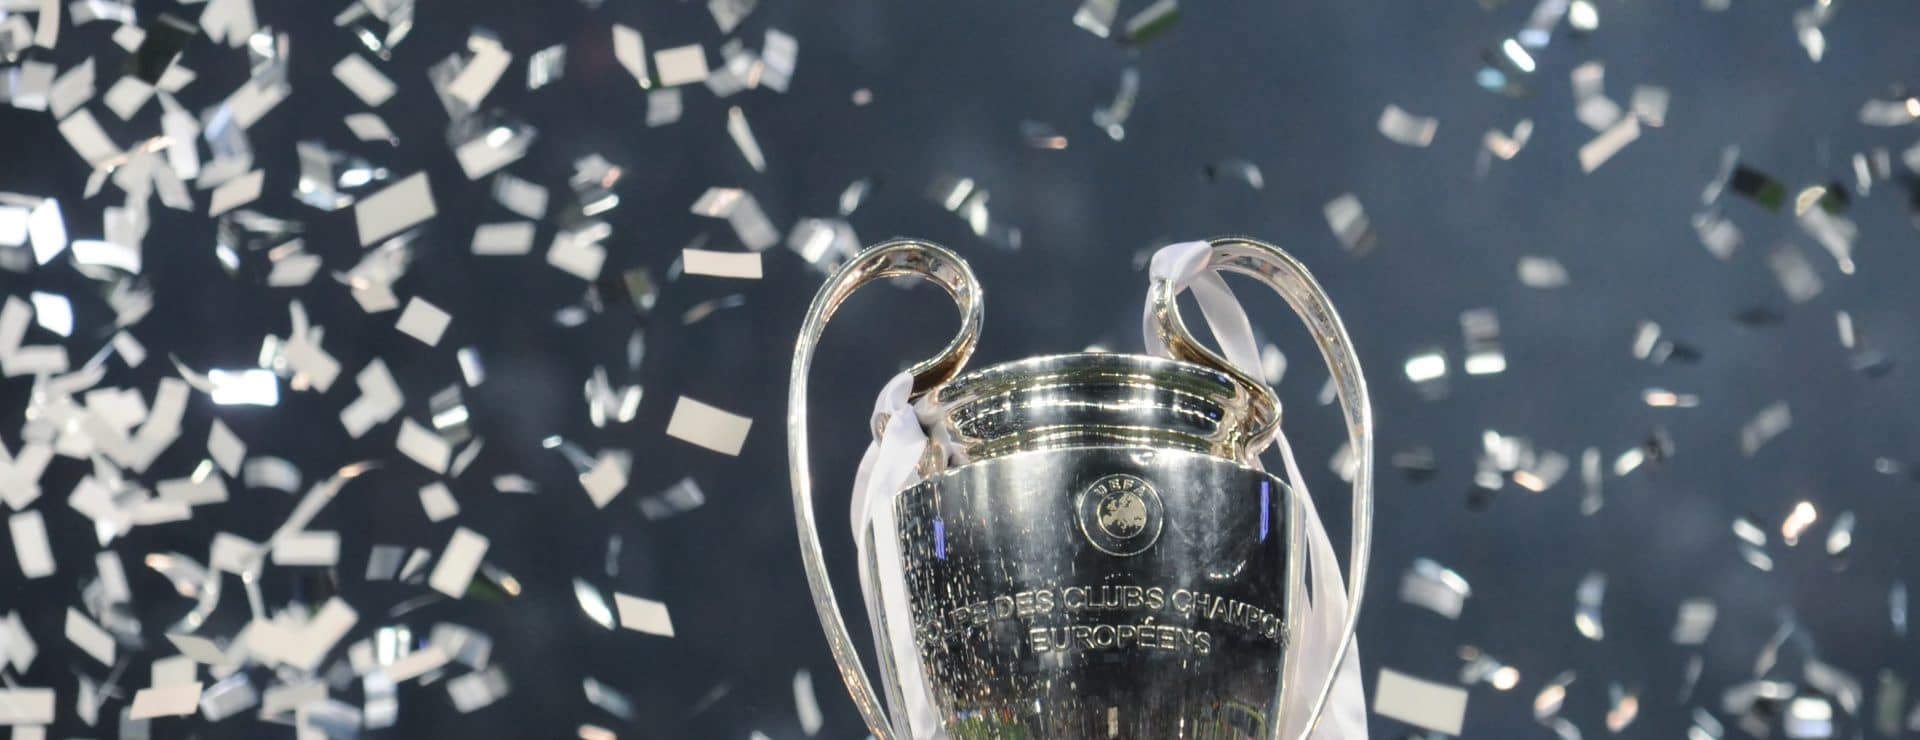 Tivify's streaming of UEFA Champions League Final - Ateme